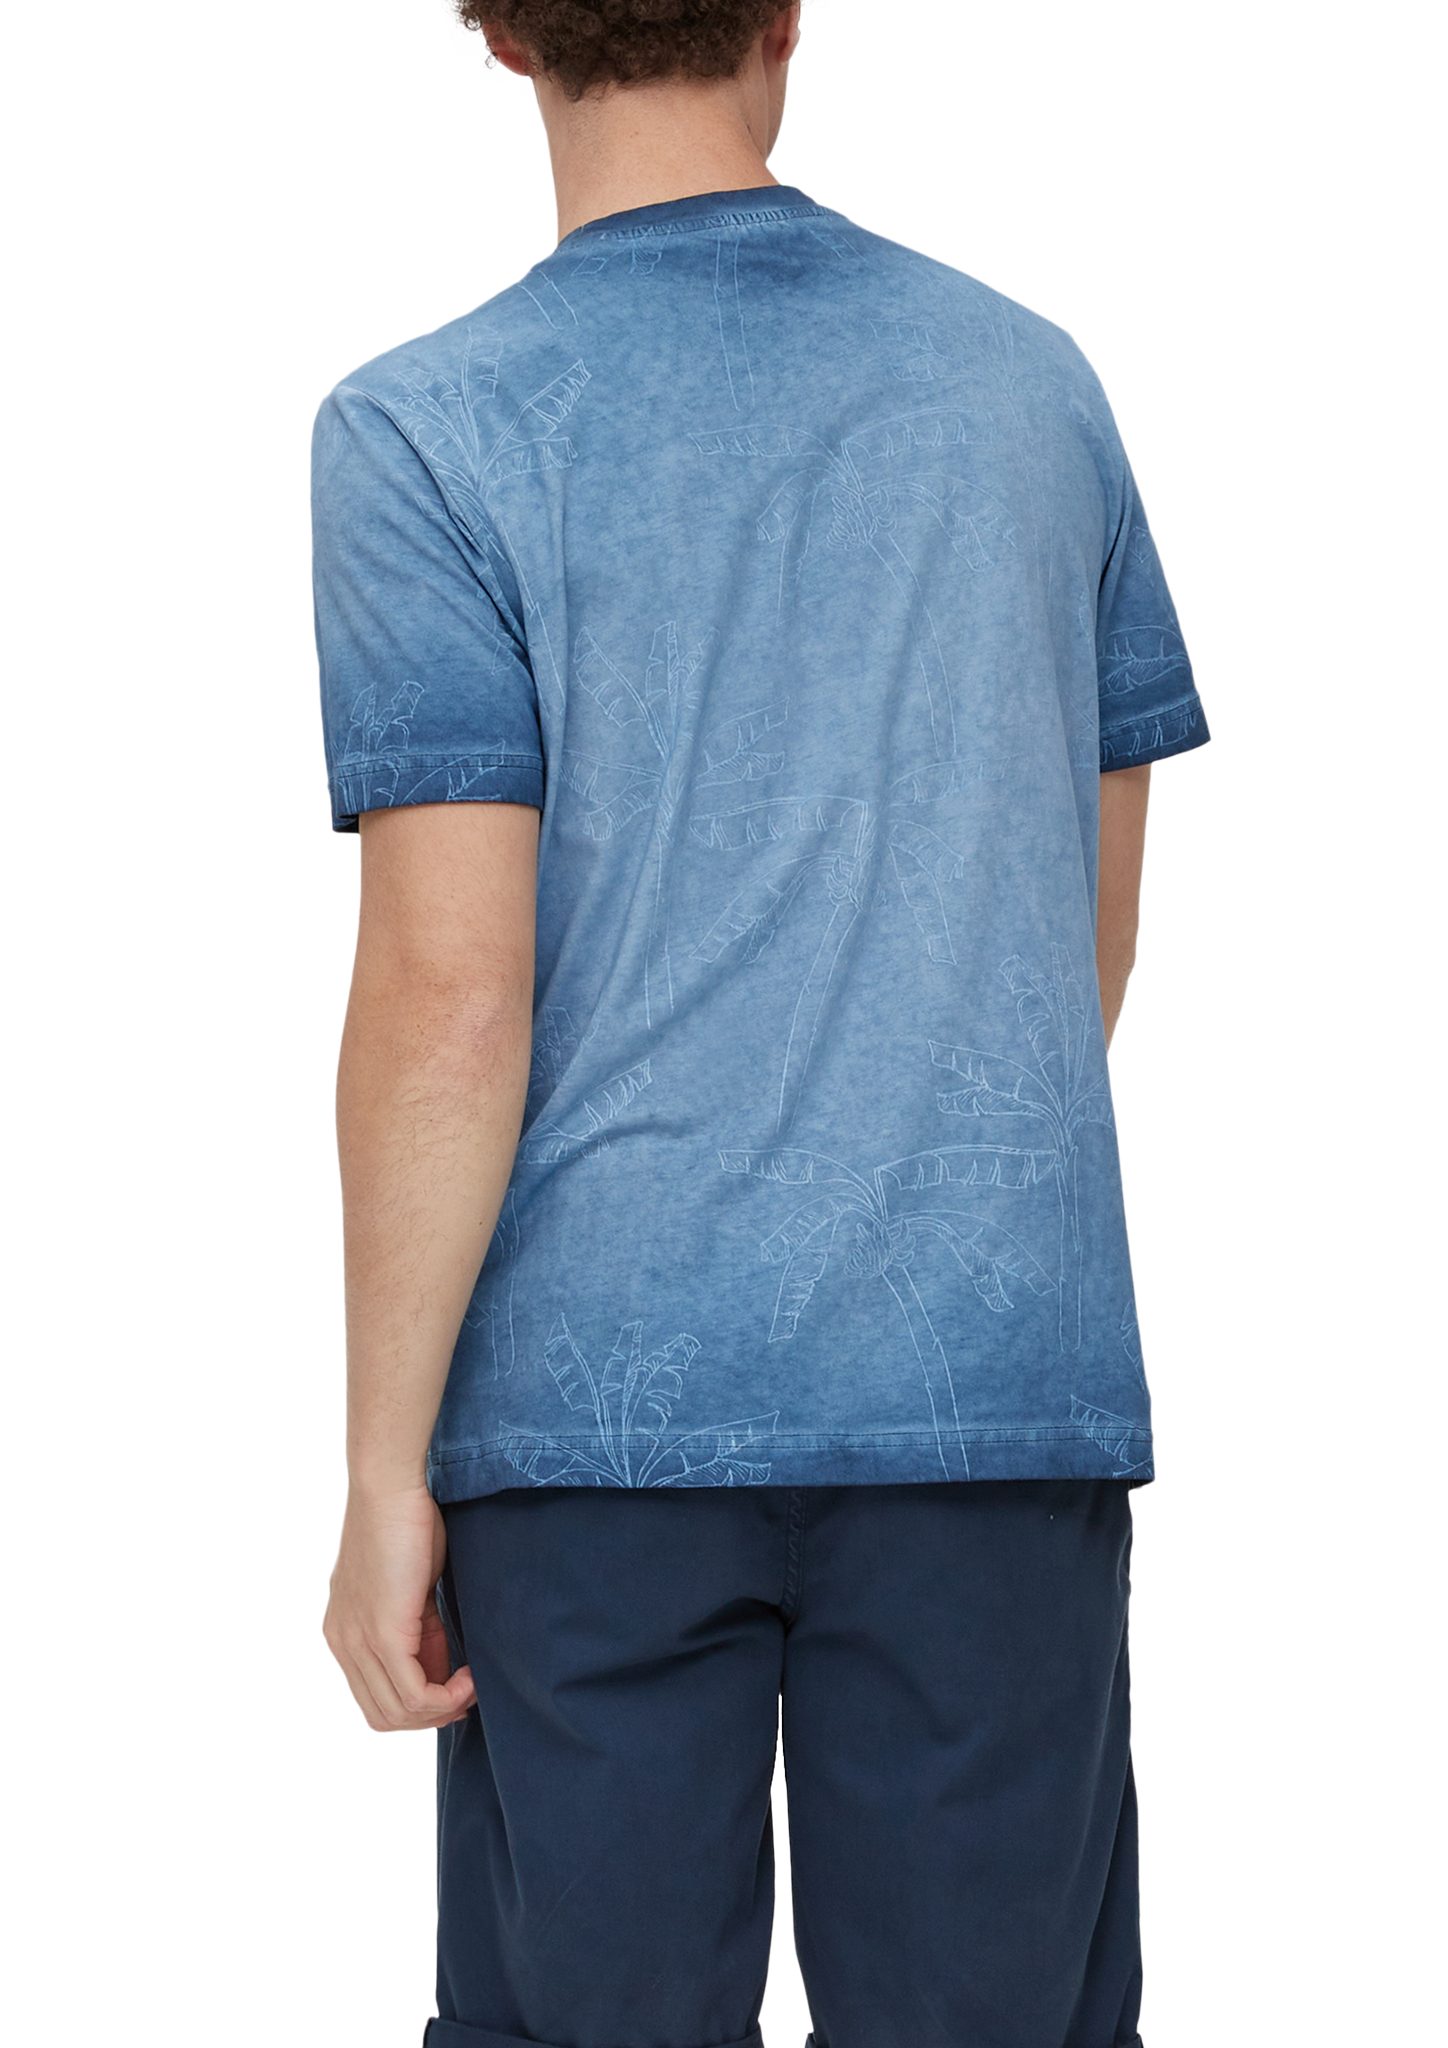 Kurzarmshirt tiefblau reiner aus QS T-Shirt Baumwolle